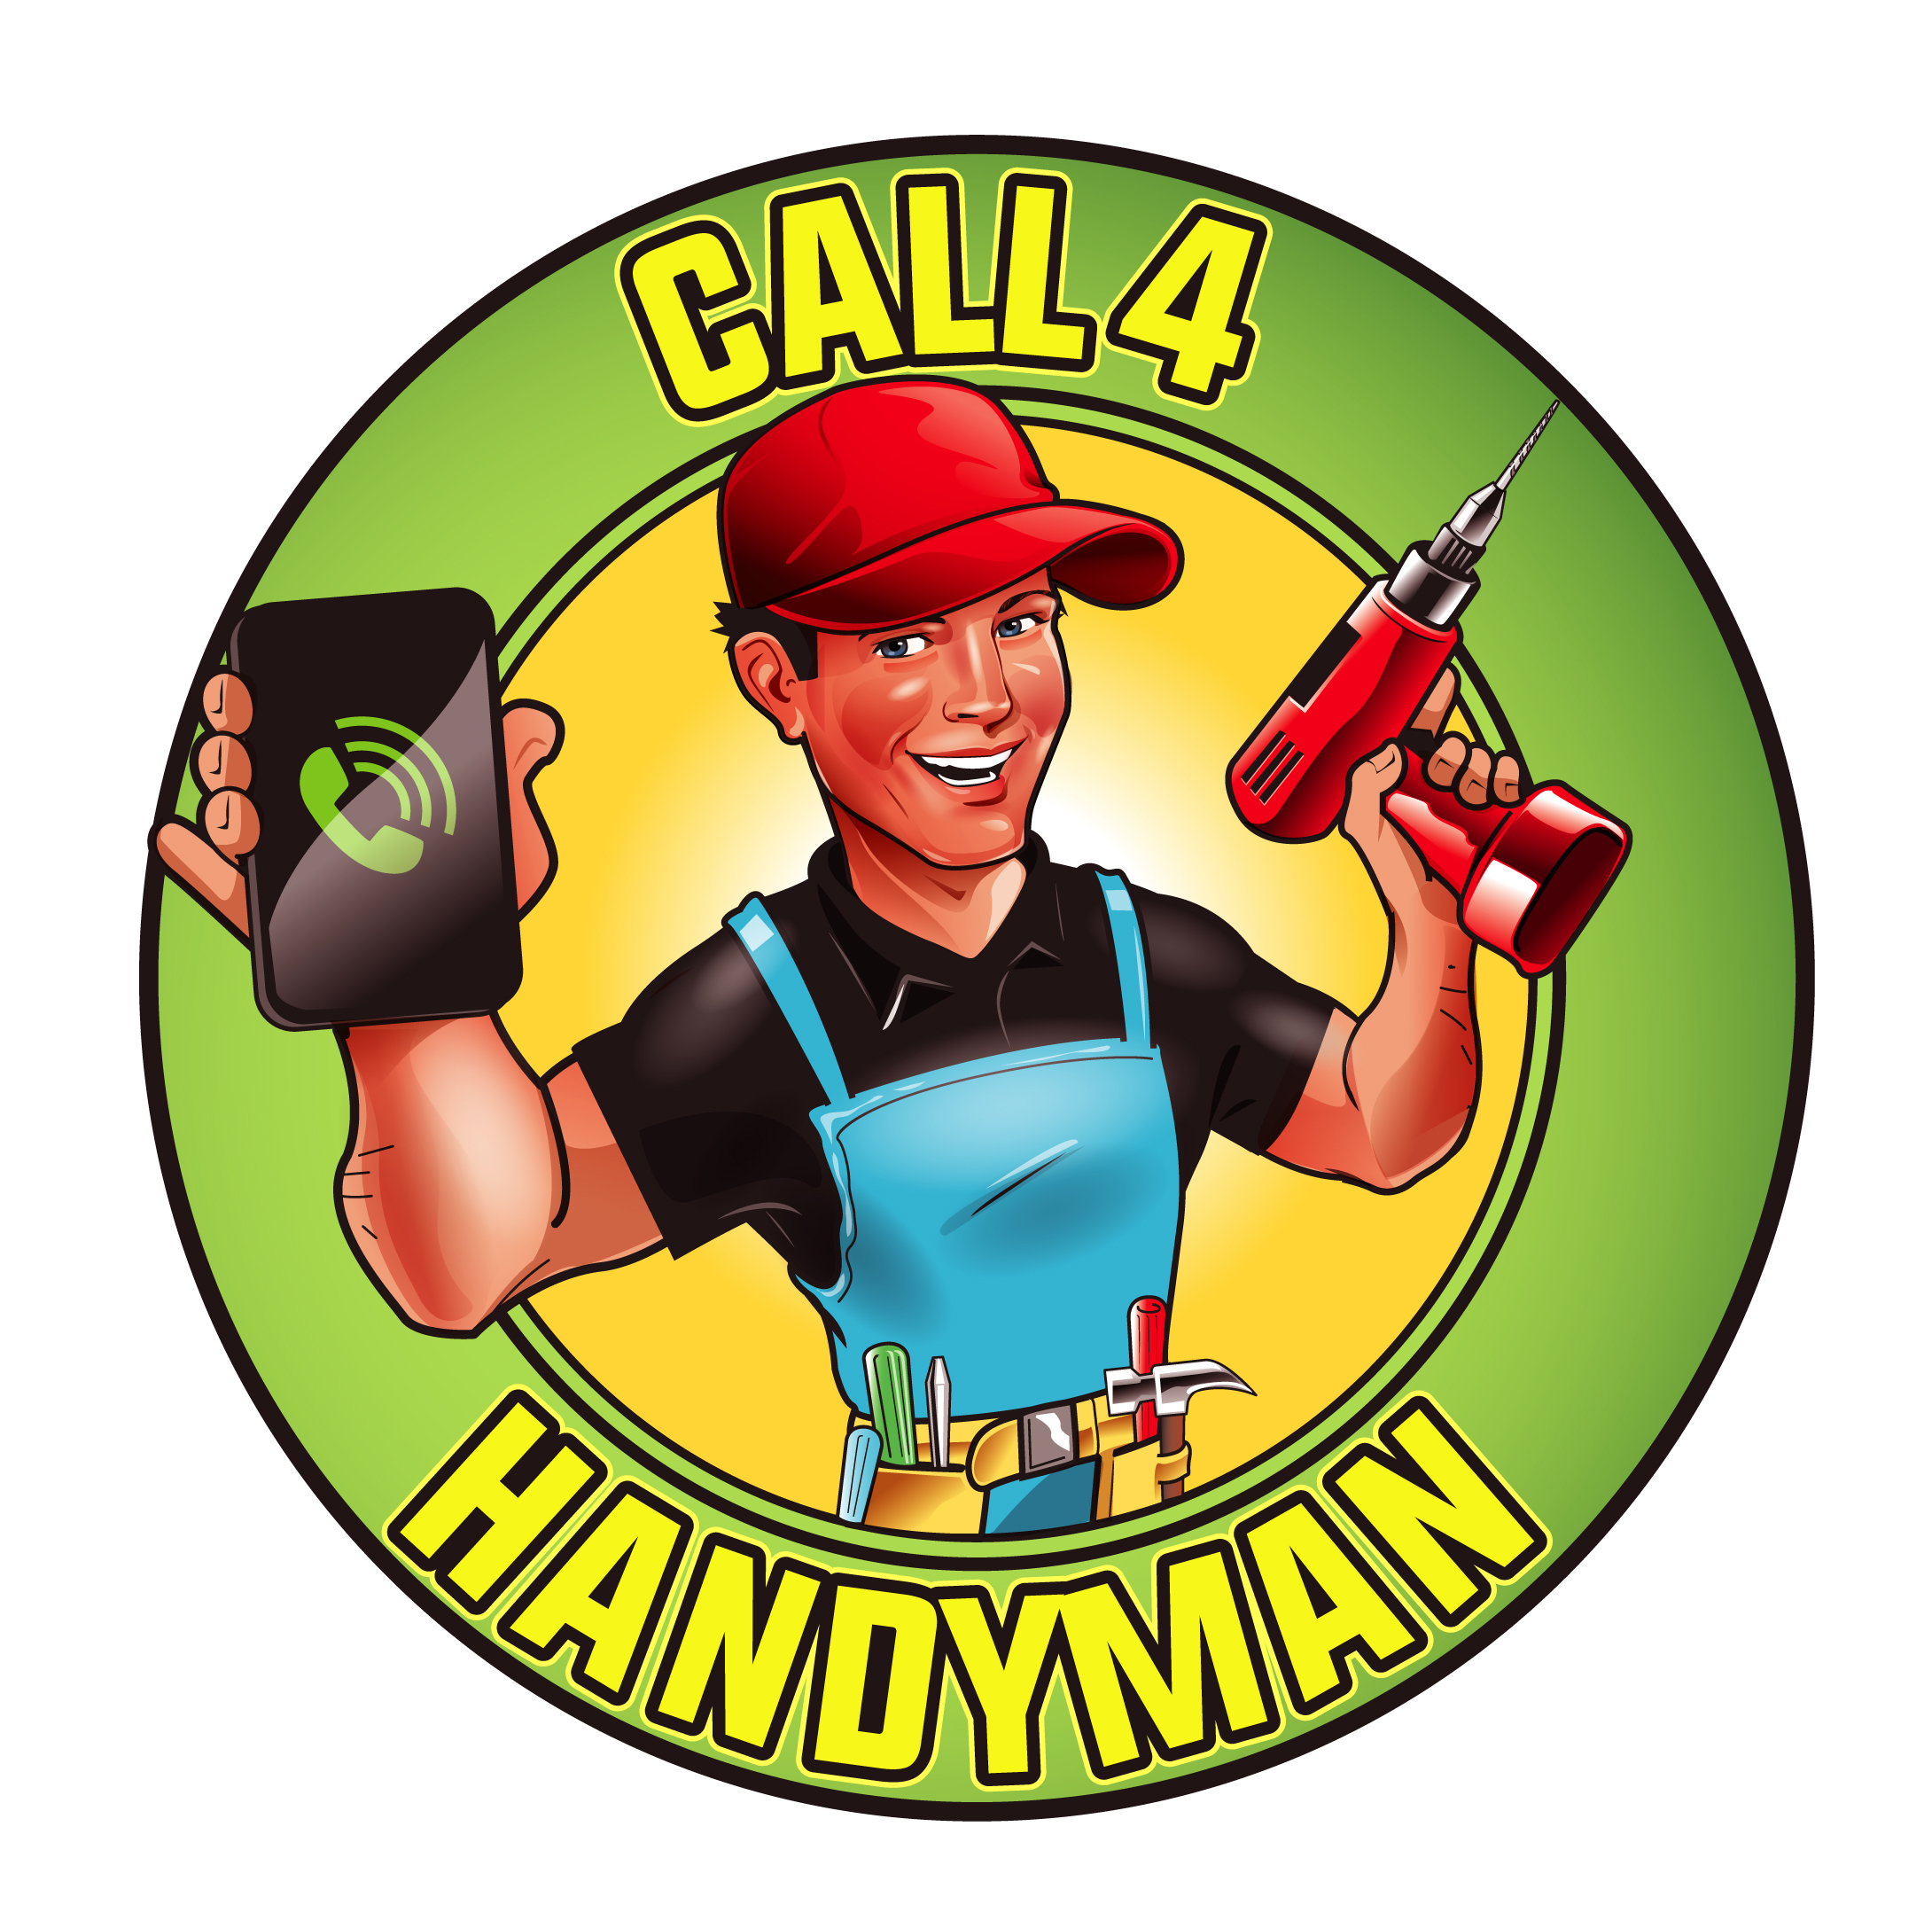 Call 4 Handyman